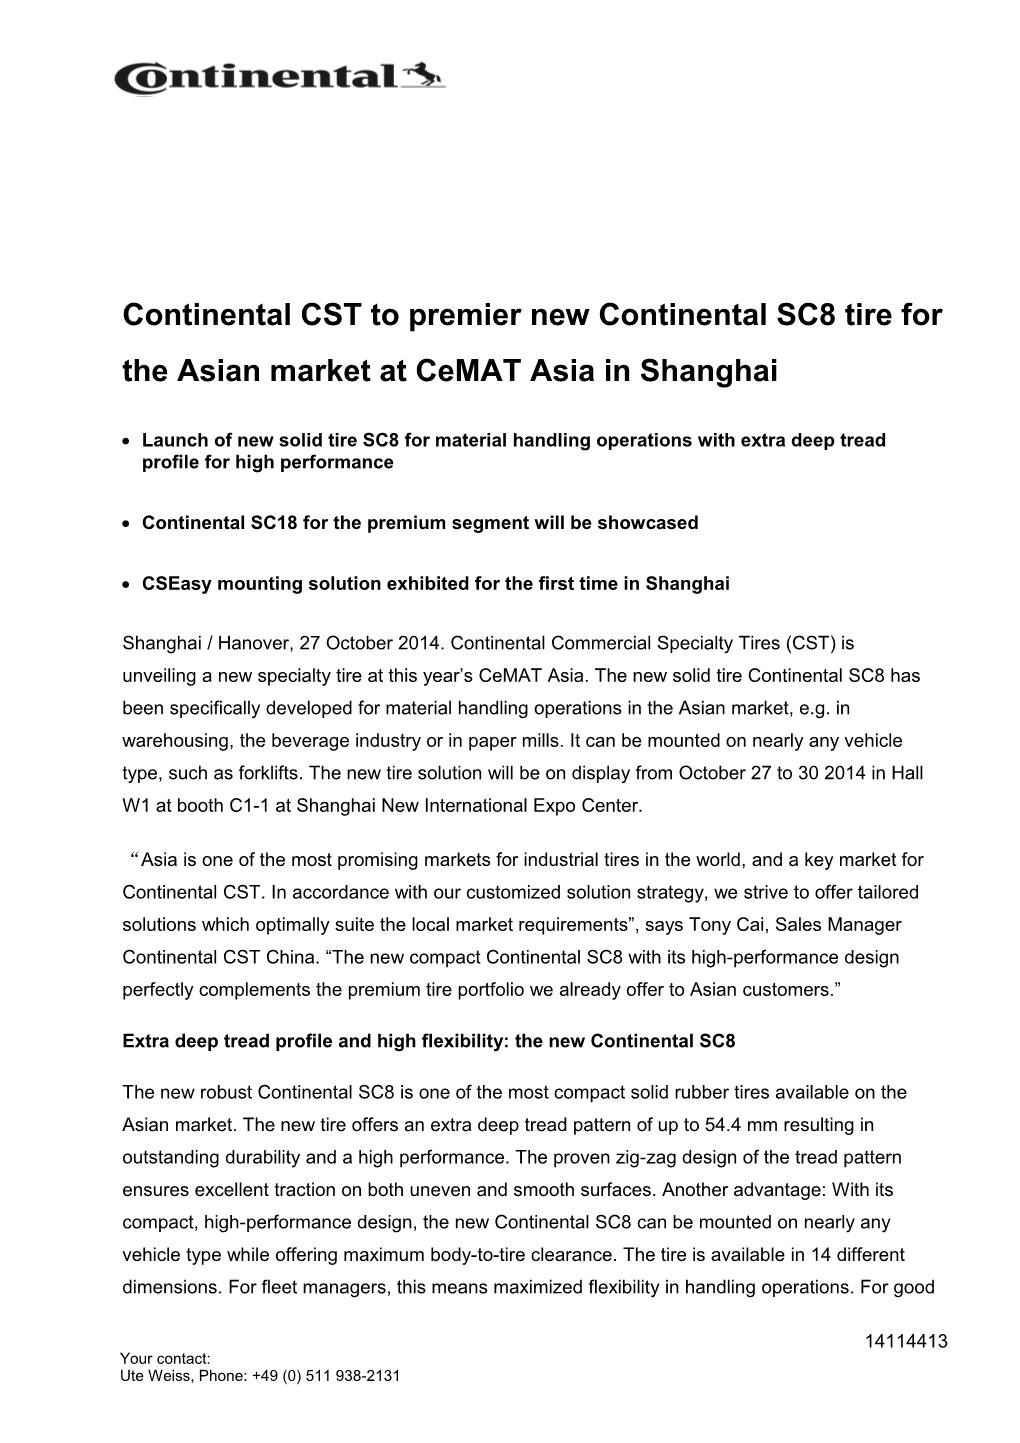 Continental SC18 for the Premium Segment Will Be Showcased